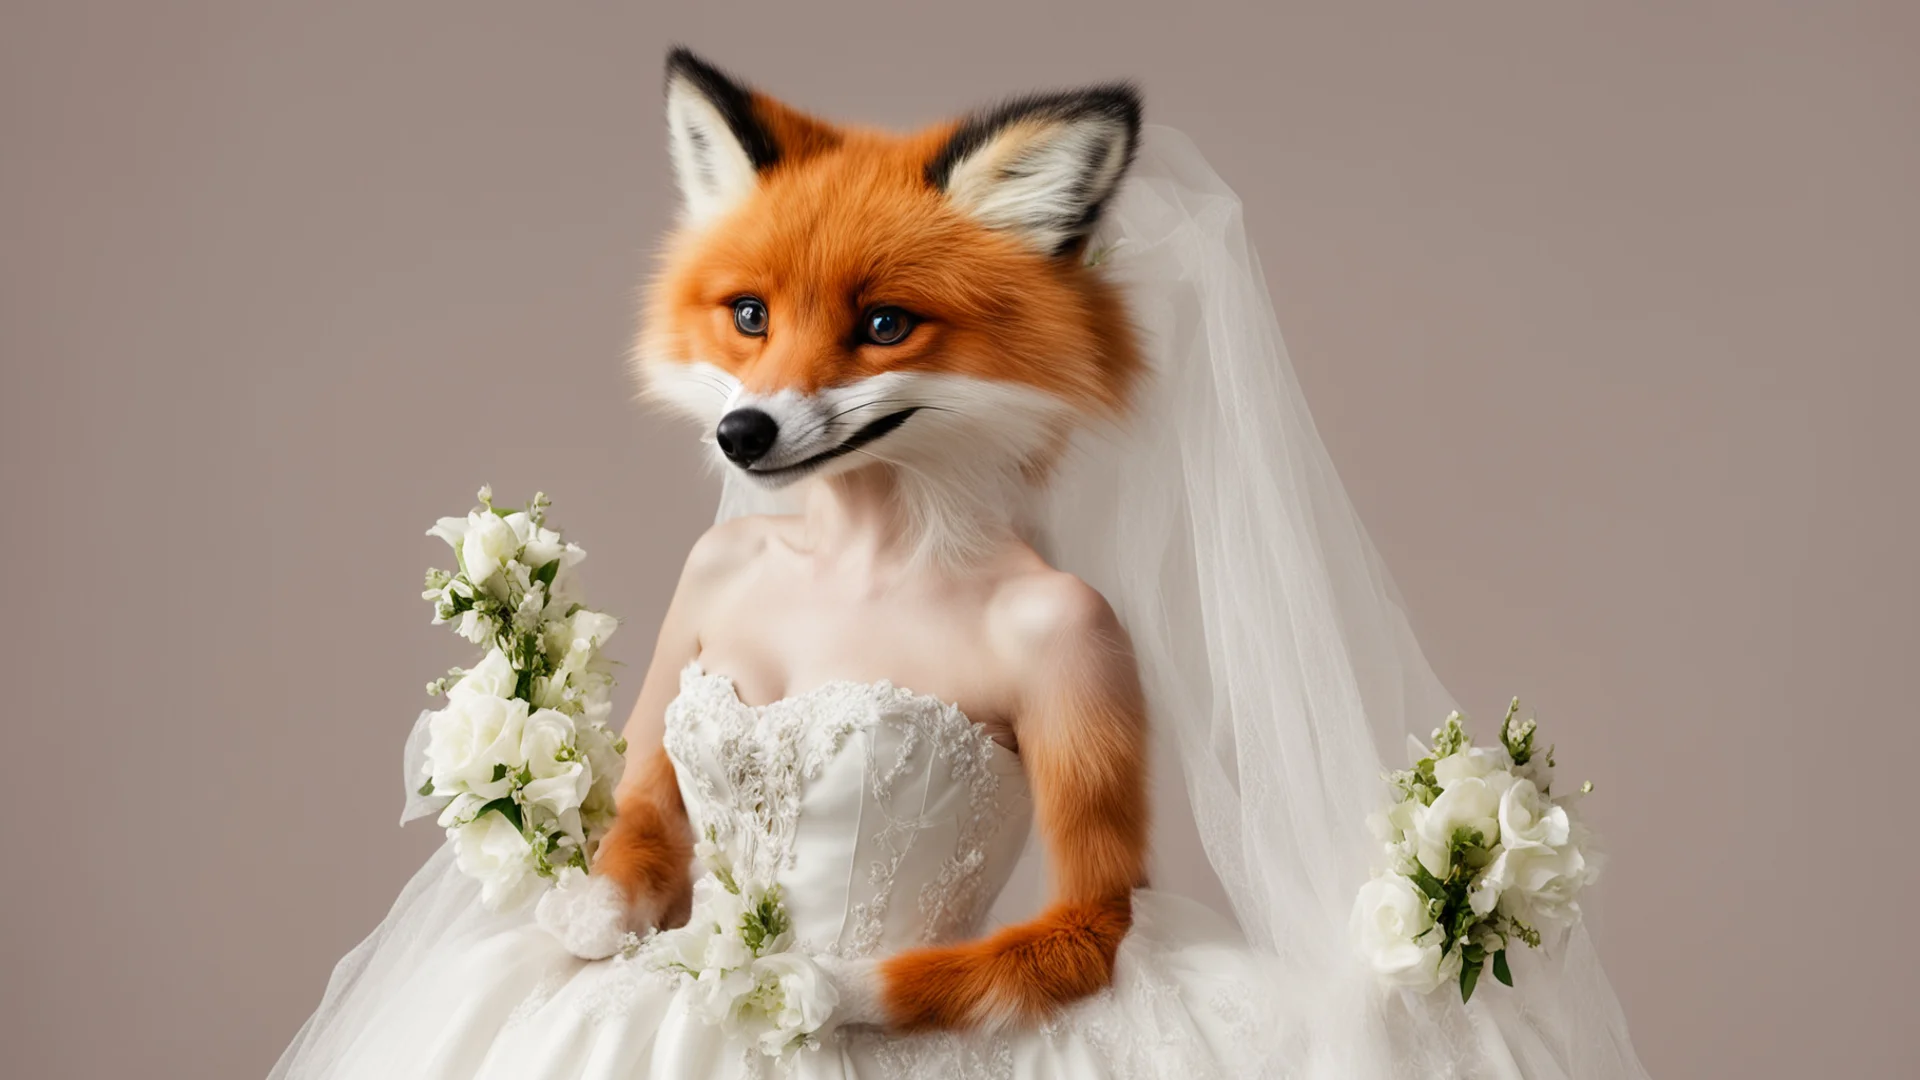 aitrending fox furry bride good looking fantastic 1 wide